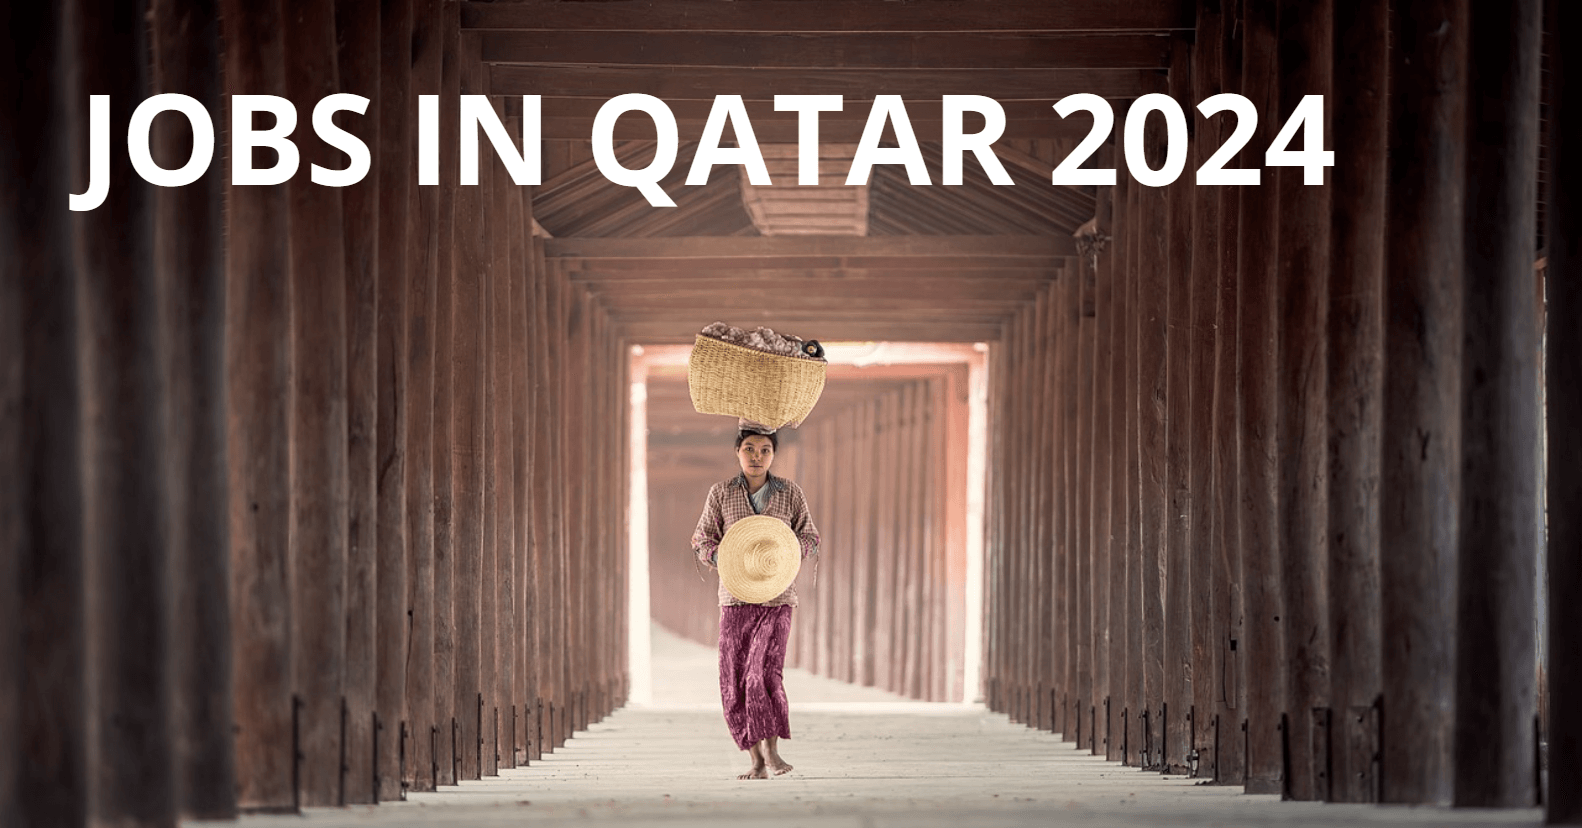 Latest Jobs in Qatar 2024